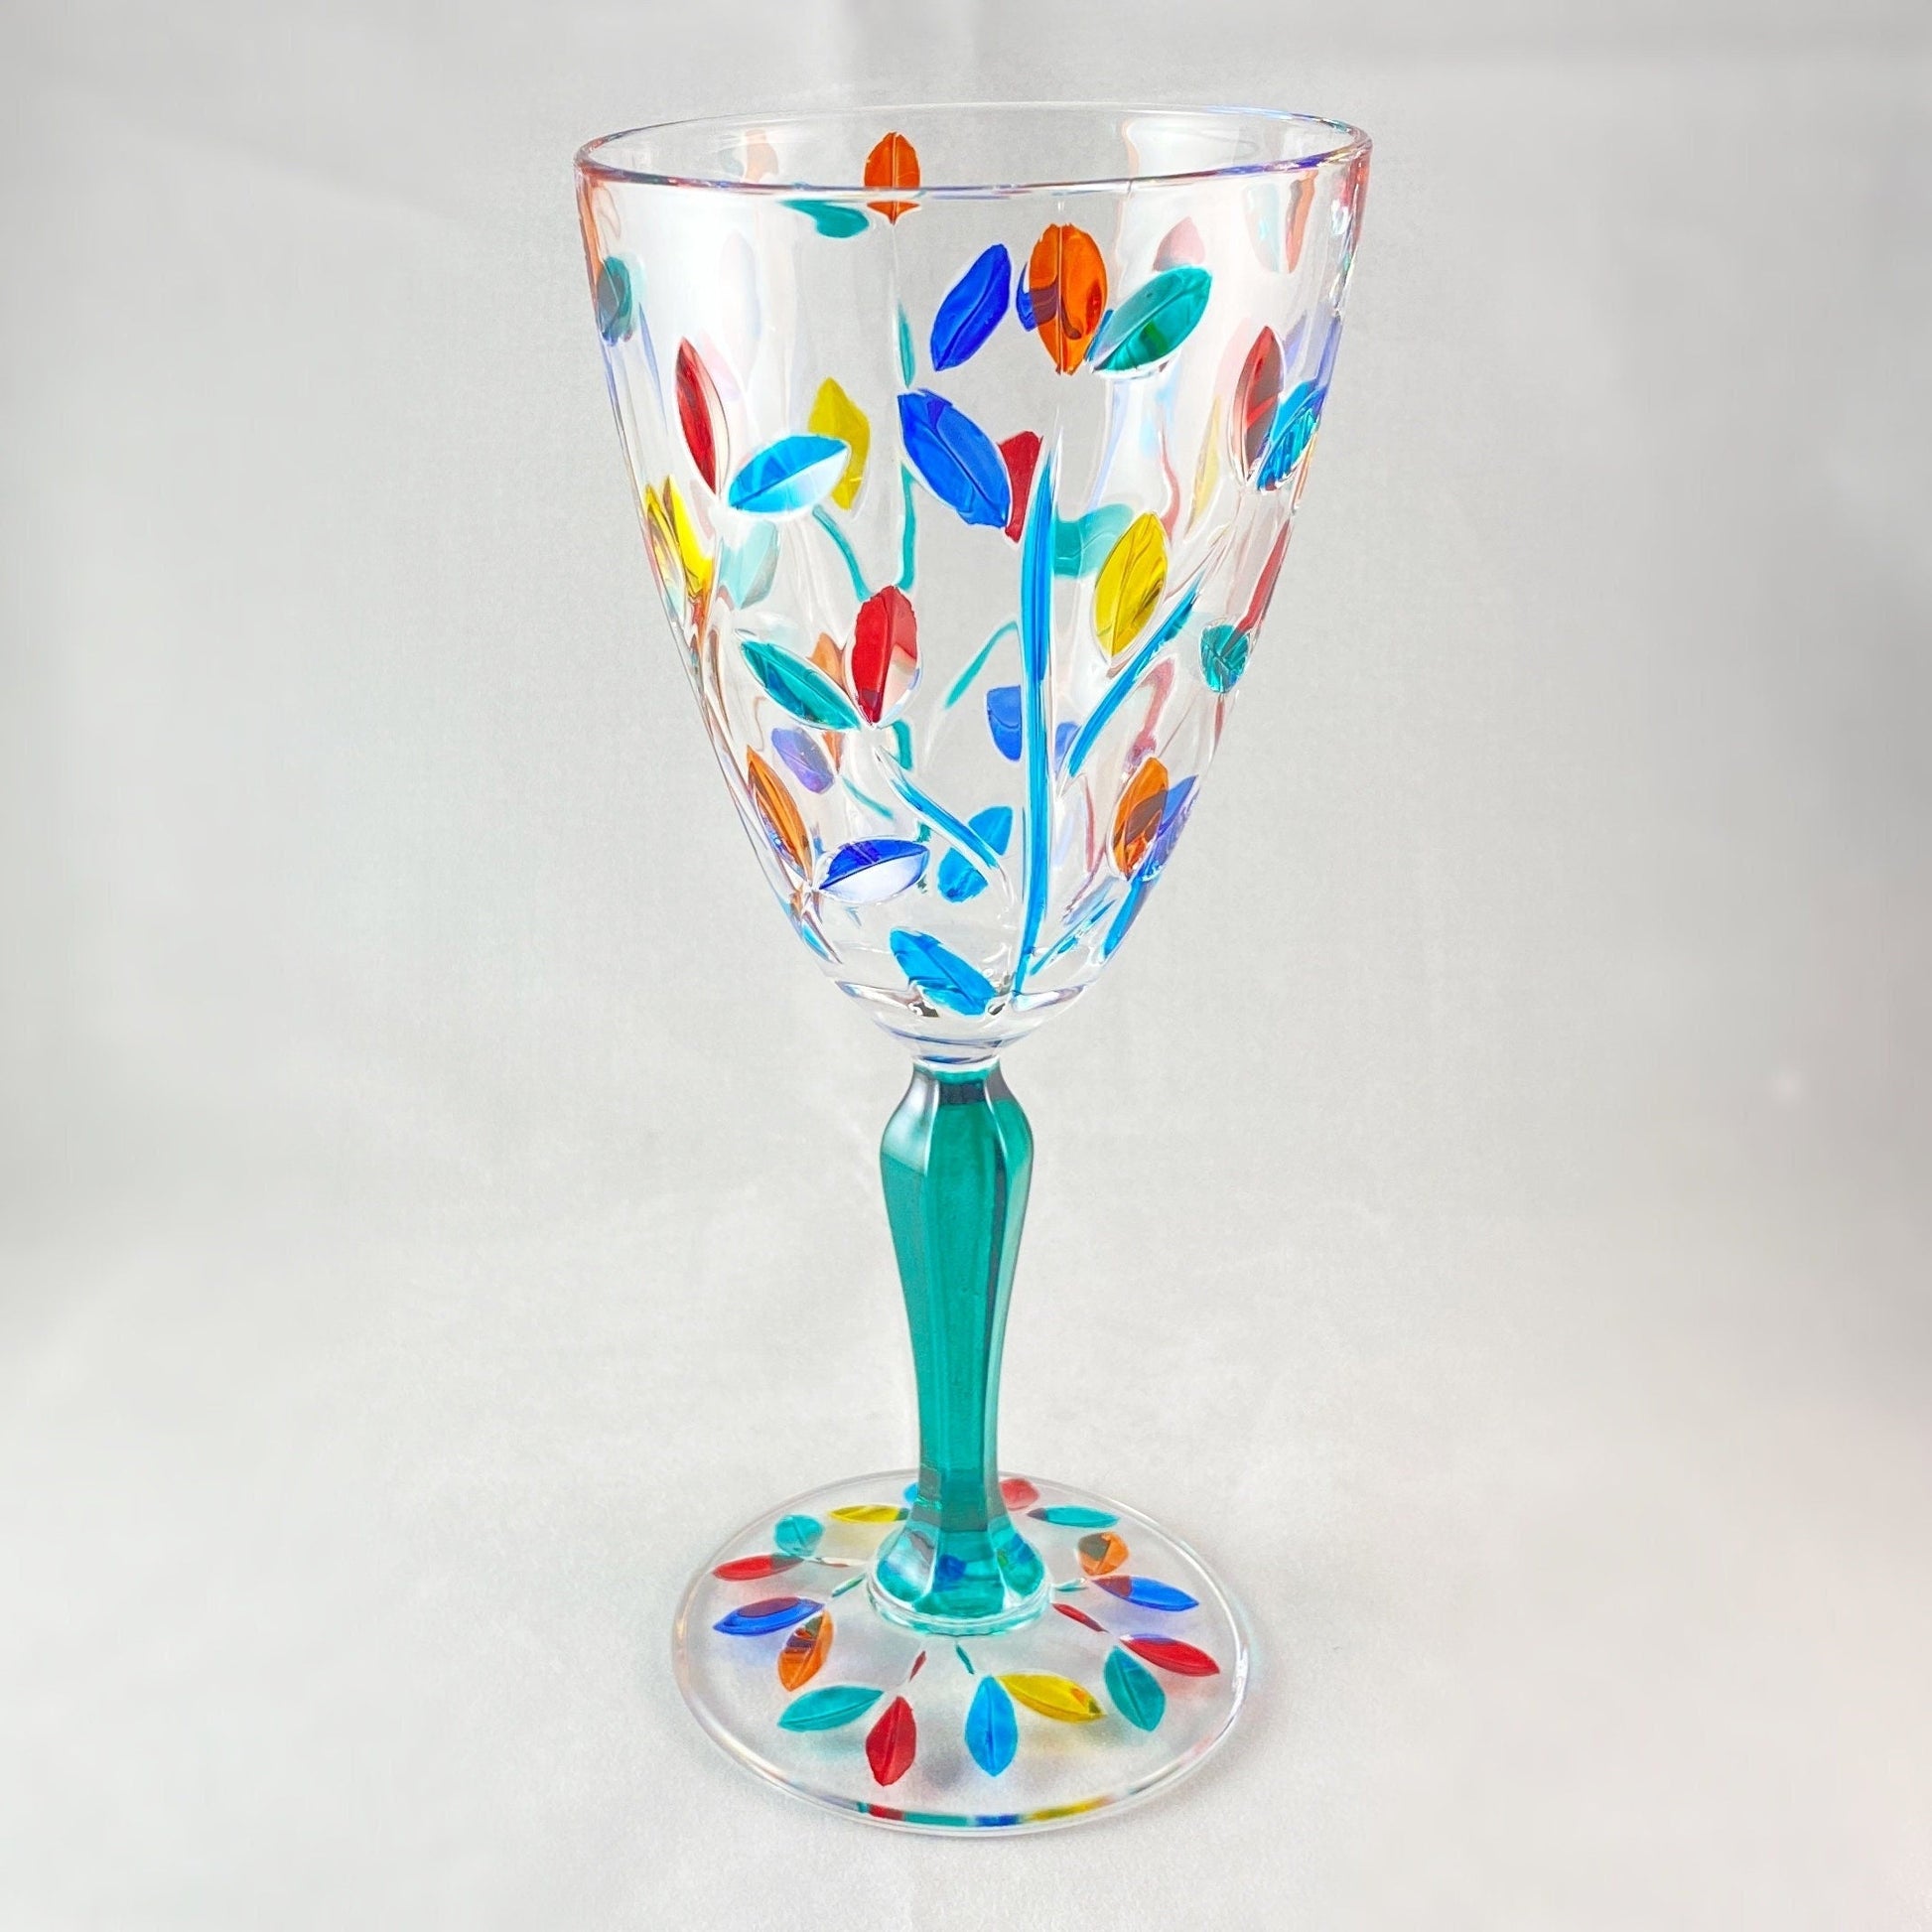 Green Stem Tree of Life Venetian Glass Wine Glass - Handmade in Italy, Colorful Murano Glass